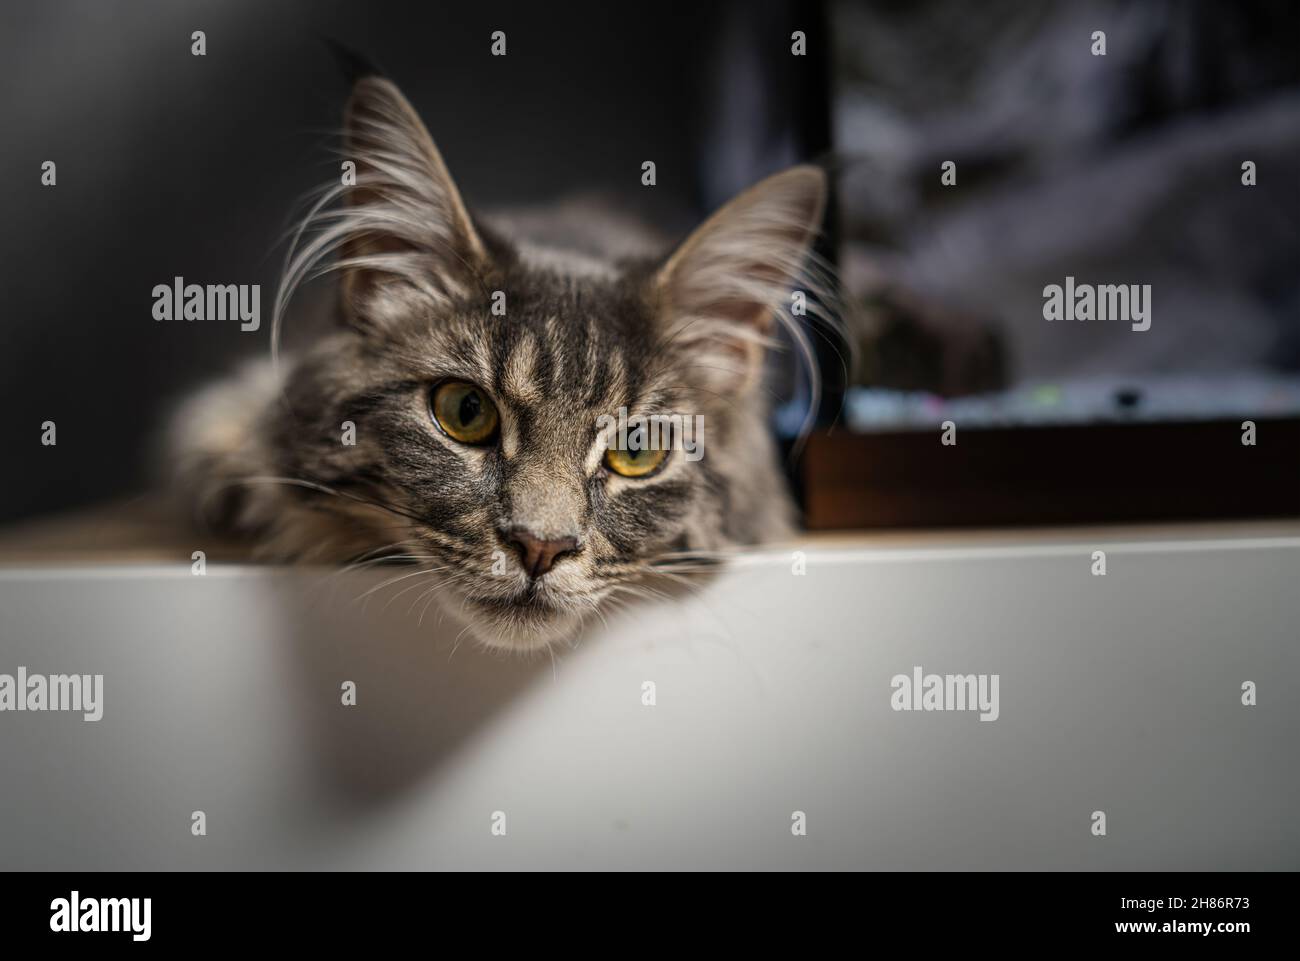 head cat close up on a dark background. Stock Photo